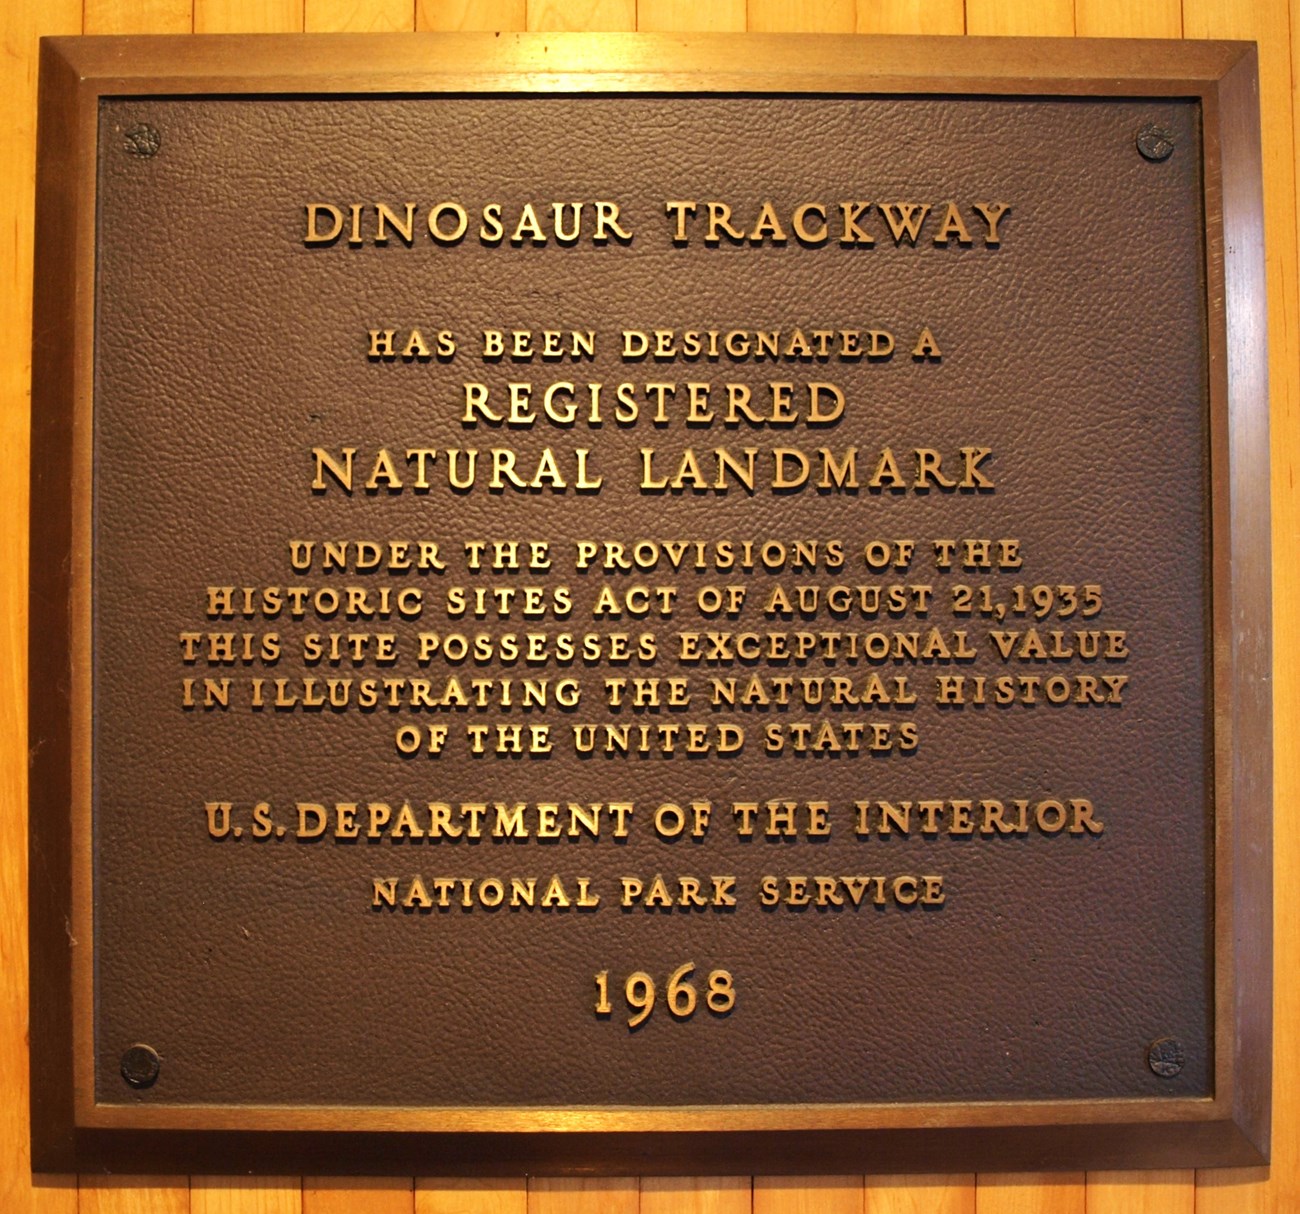 Photo of a metal plaque commemorating Dinosaur Trackway NNL designation in 1968.